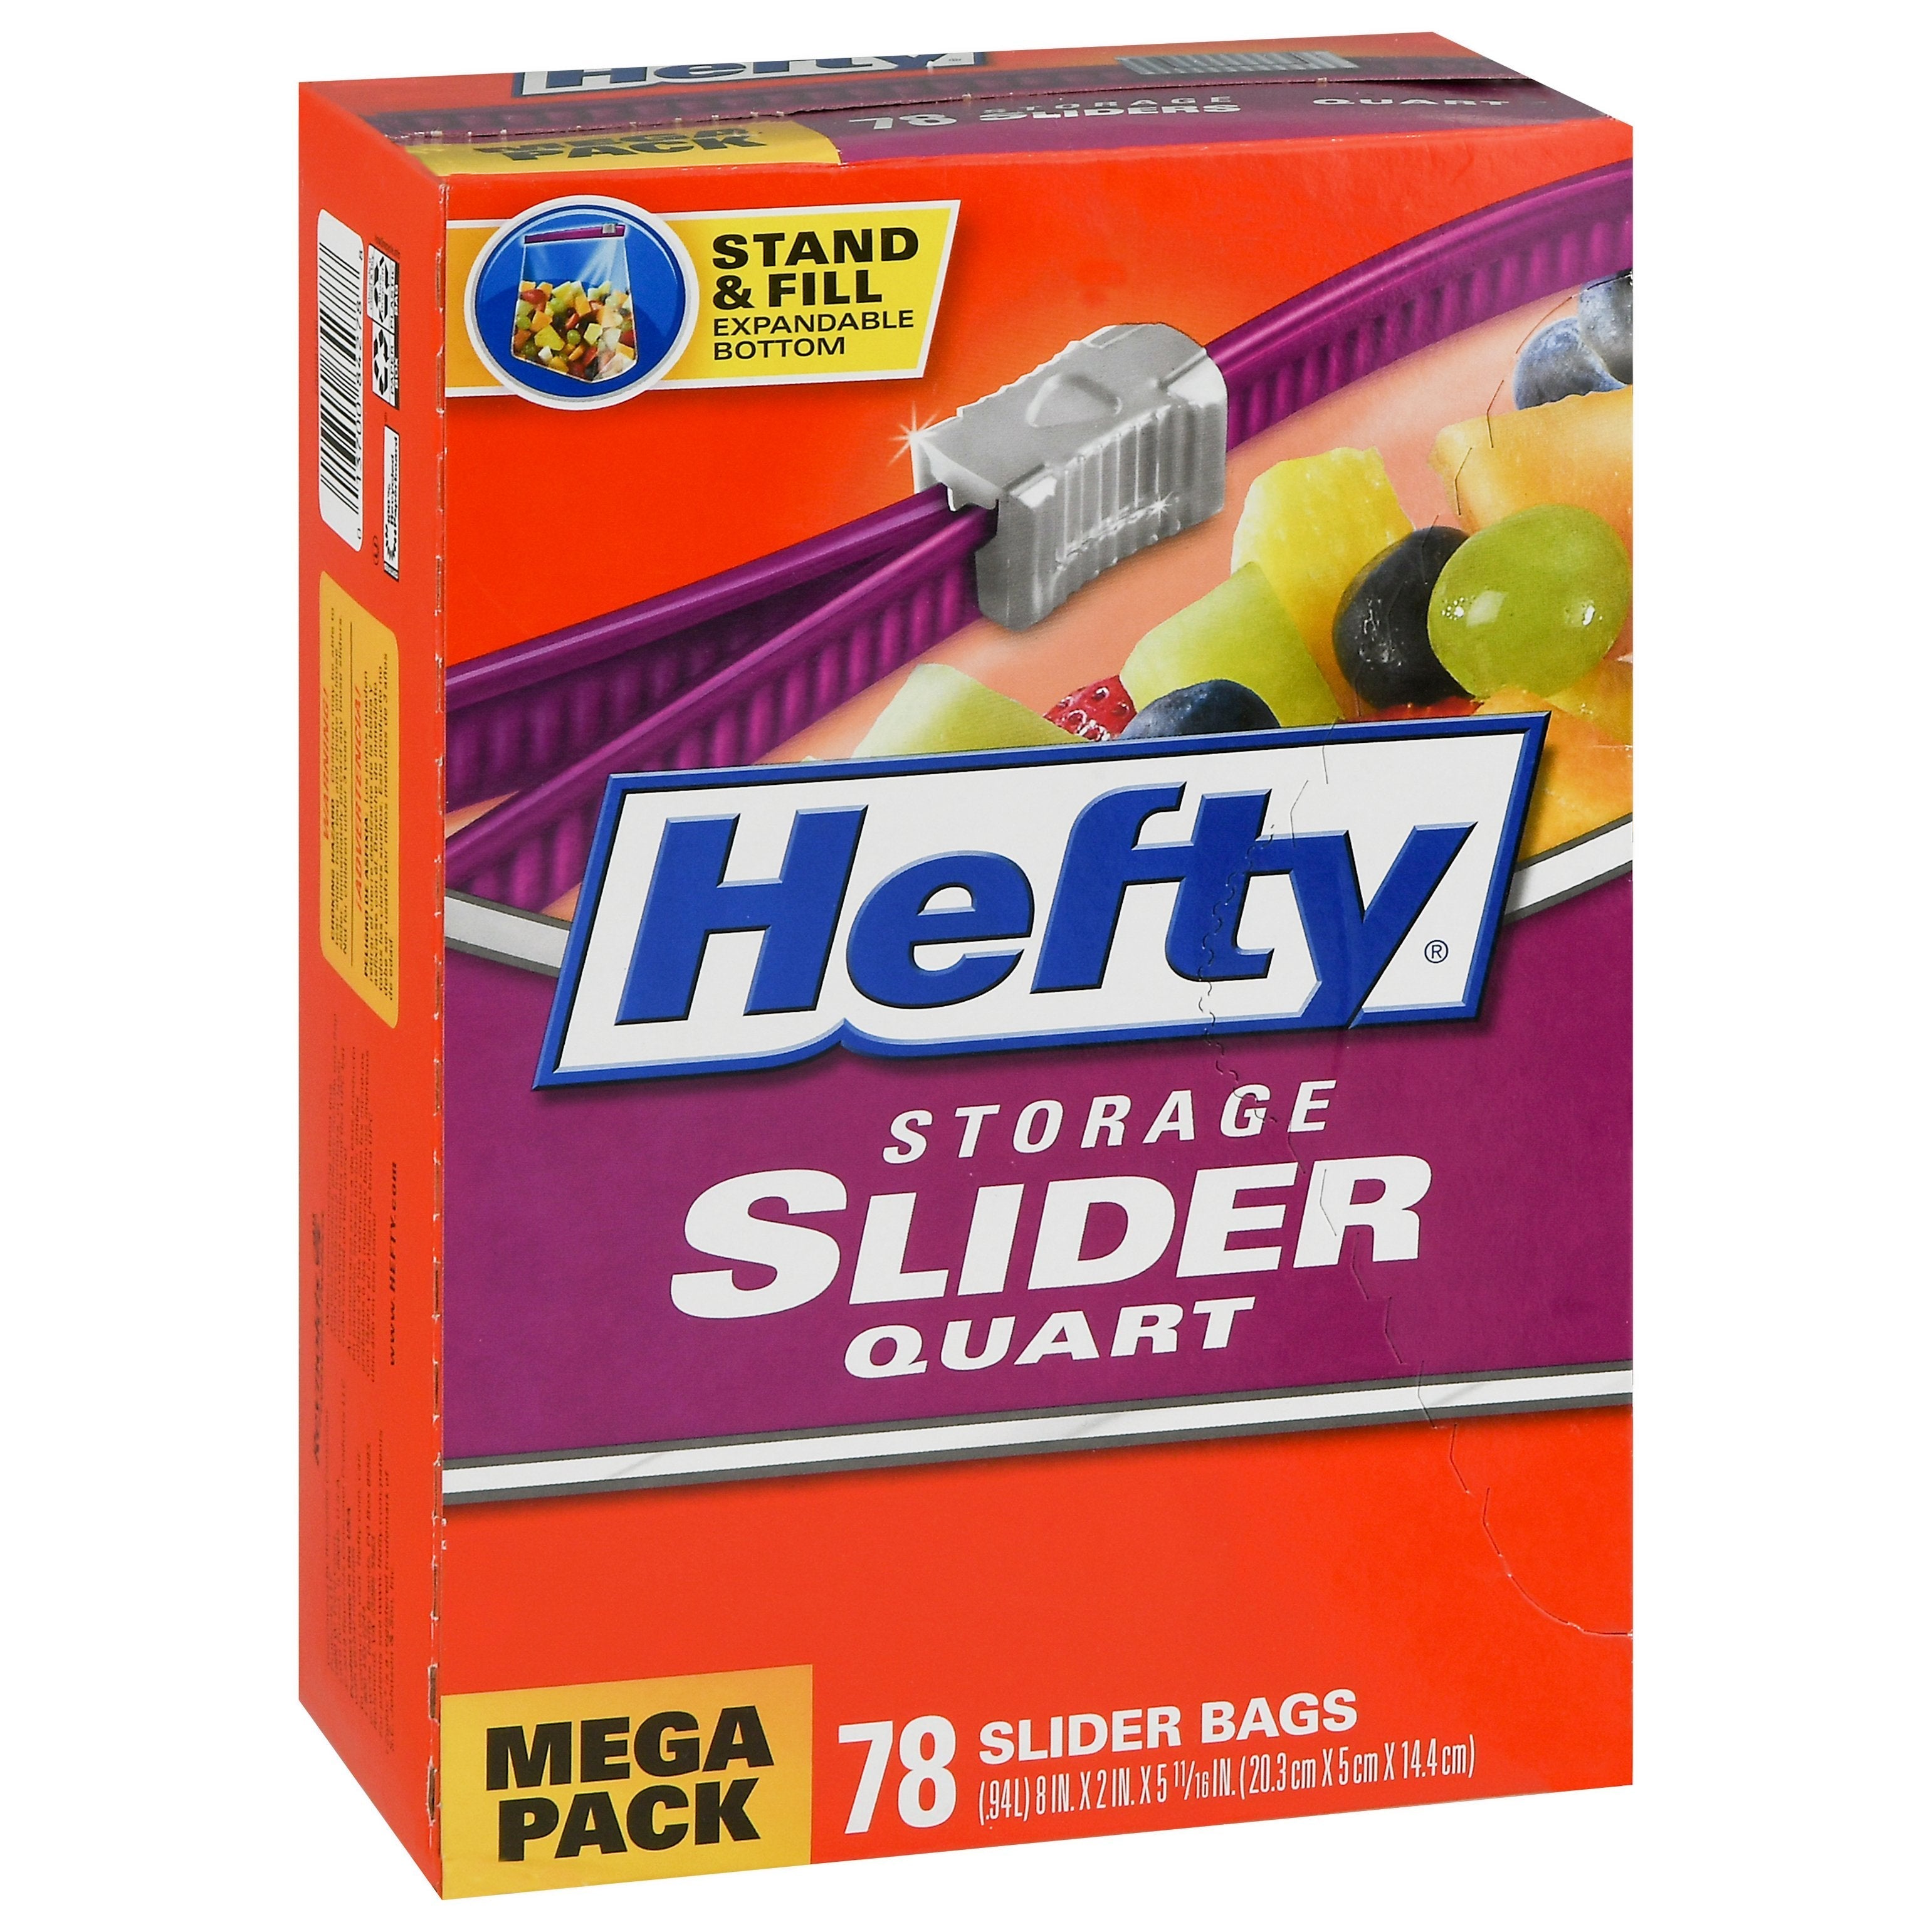 Hefty Slider Storage Bags (Quart, 20 Count)